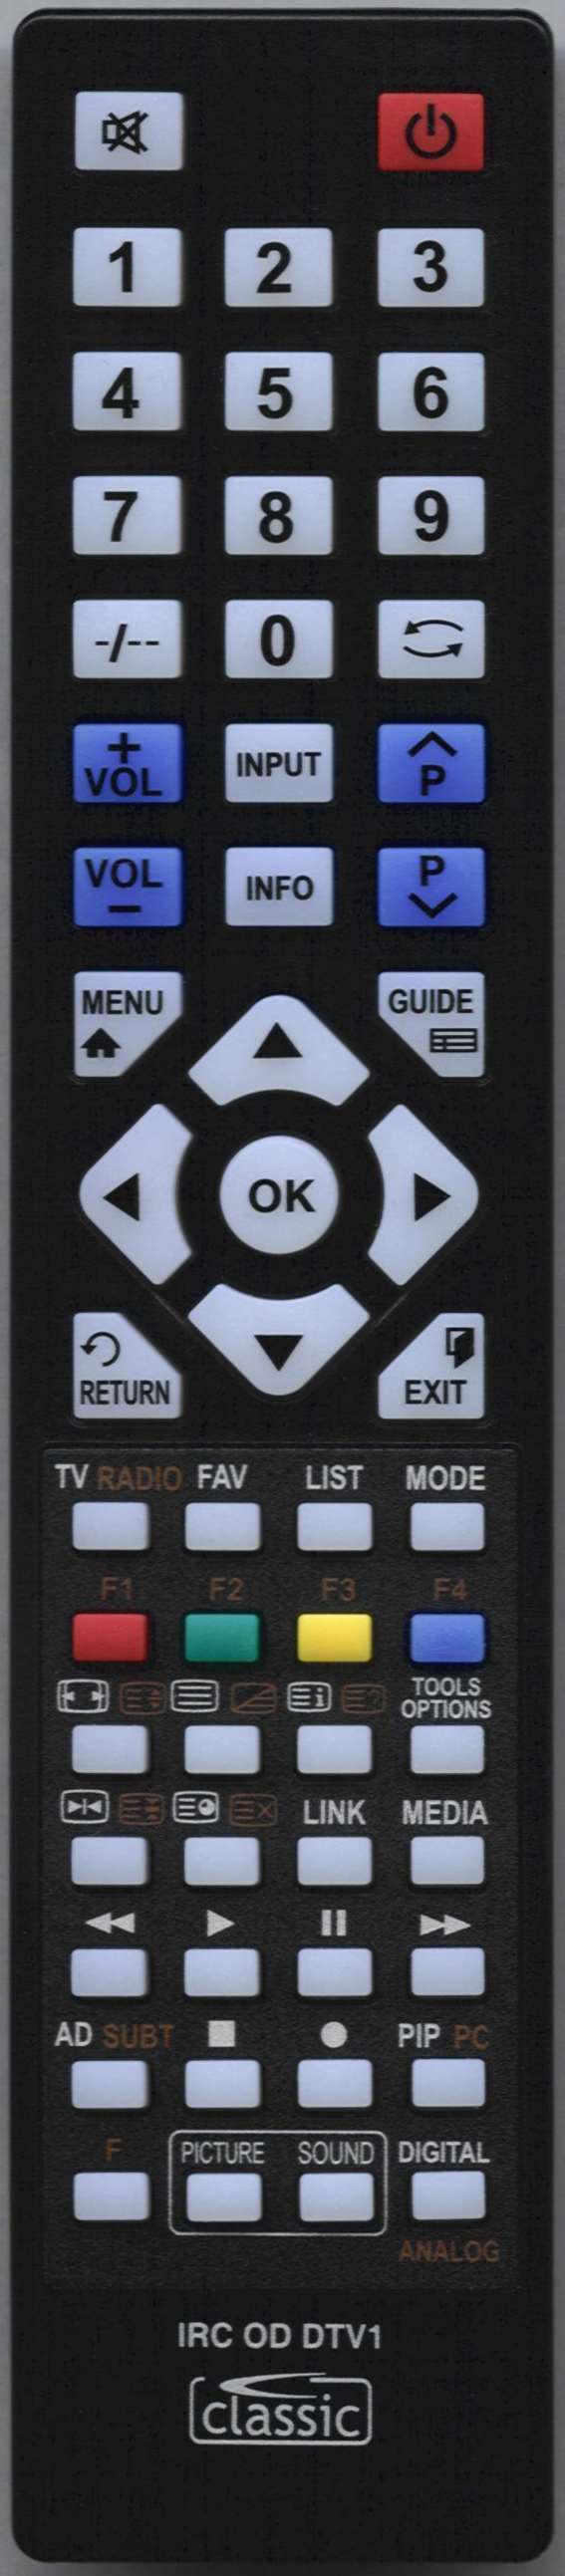 AKURA APL2YR1968UH Remote Control Alternative